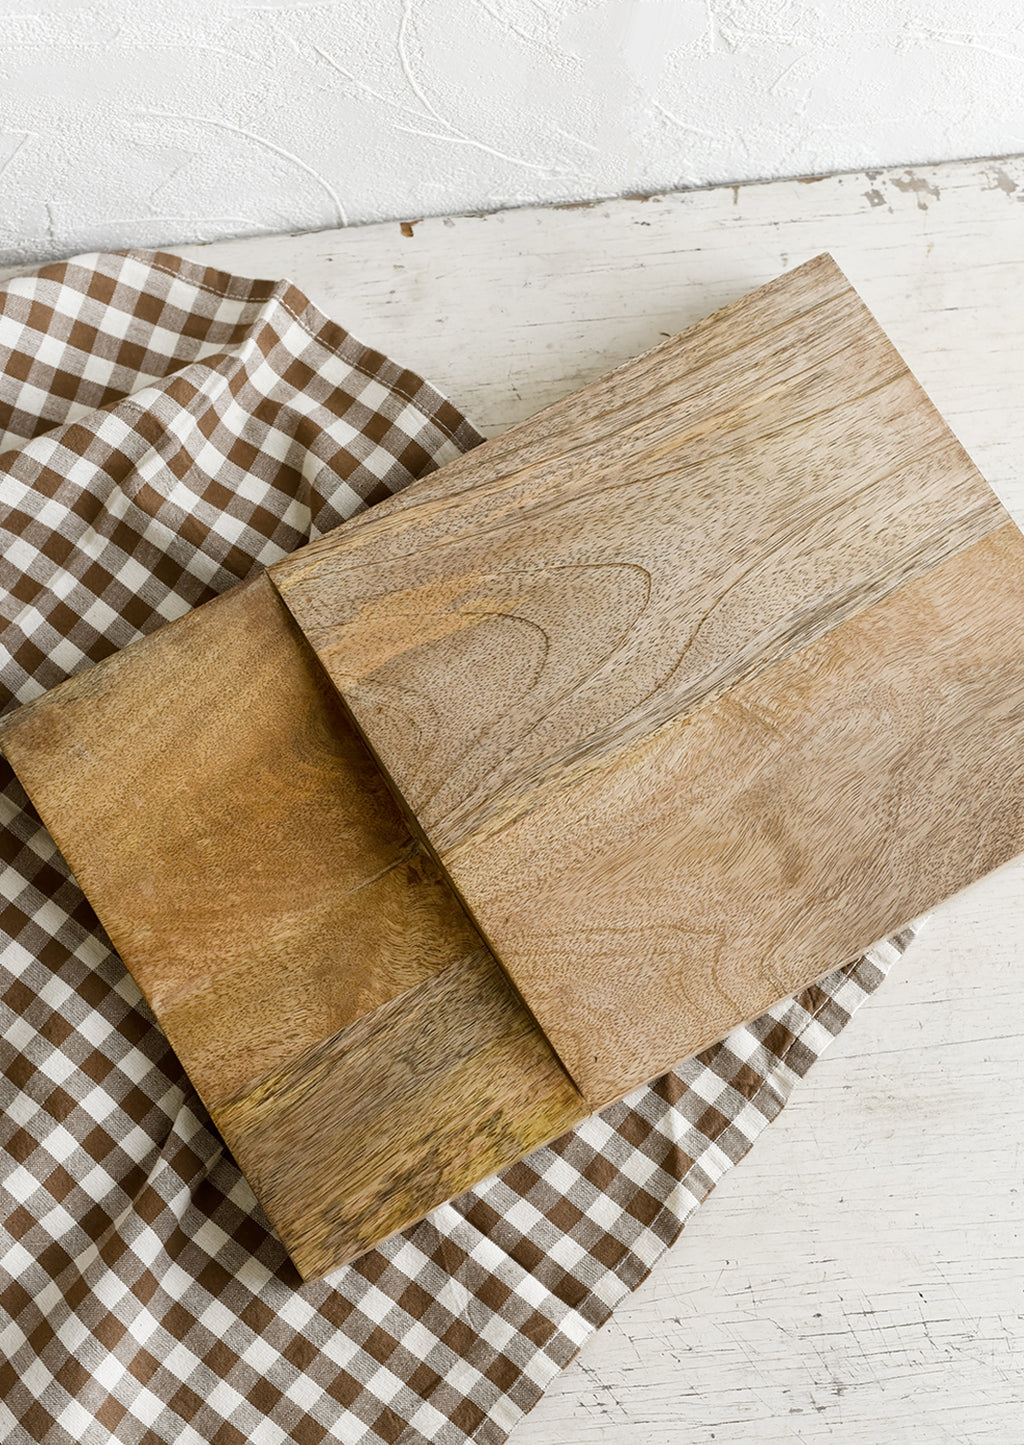 2: A mango wood cutting board resting on a gingham tea towel.